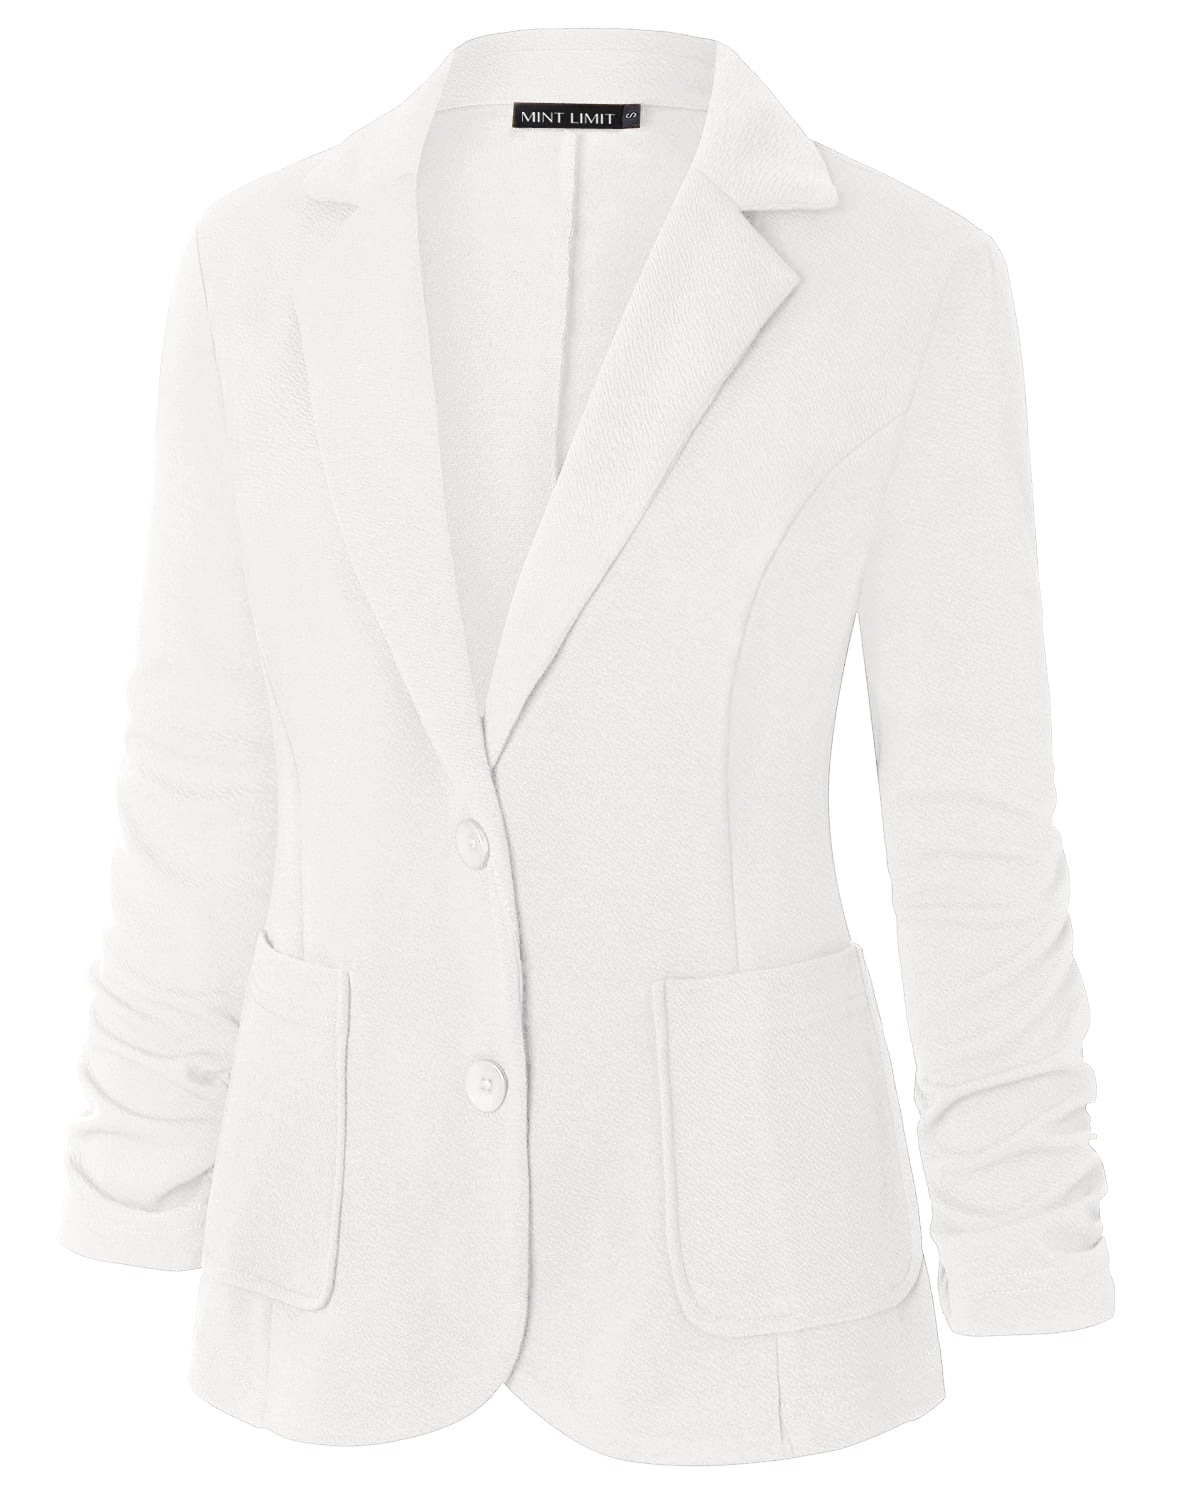 MINTLIMIT Womens Casual 3/4 Sleeve Open Front Blazer Pockets Work Suit Office Jacket